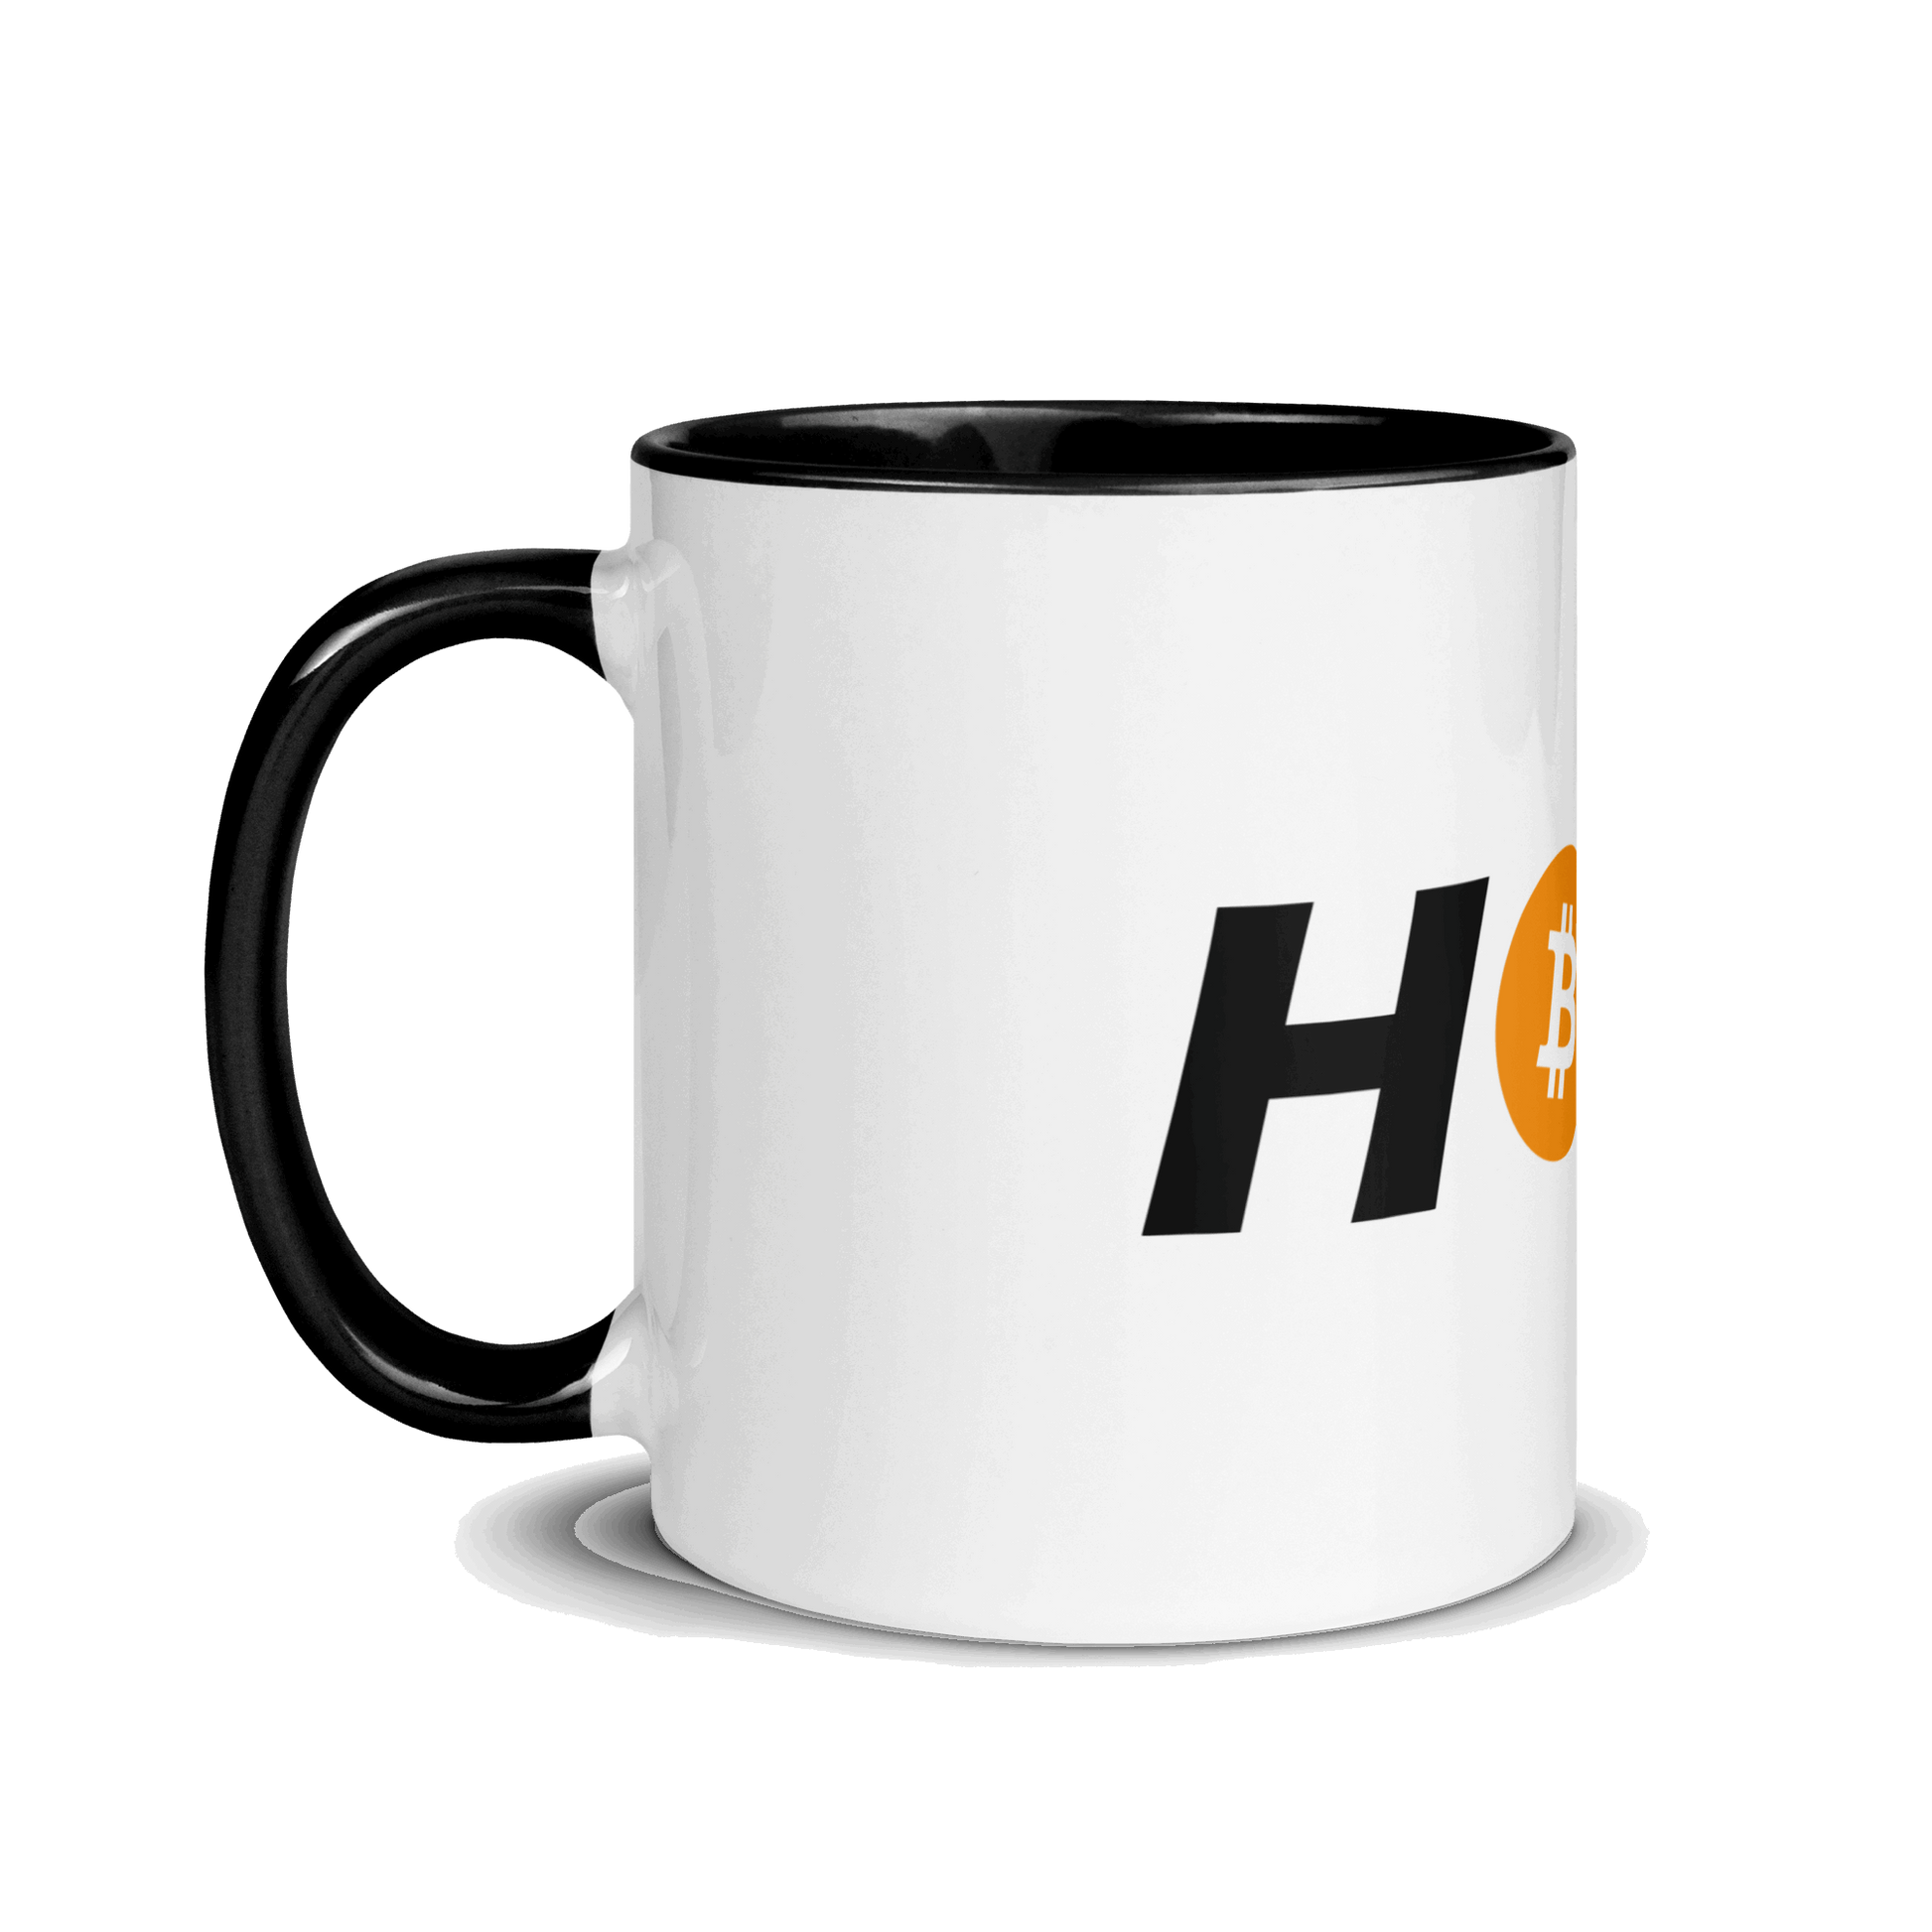 HODL Bitcoin - Mug with Color Inside